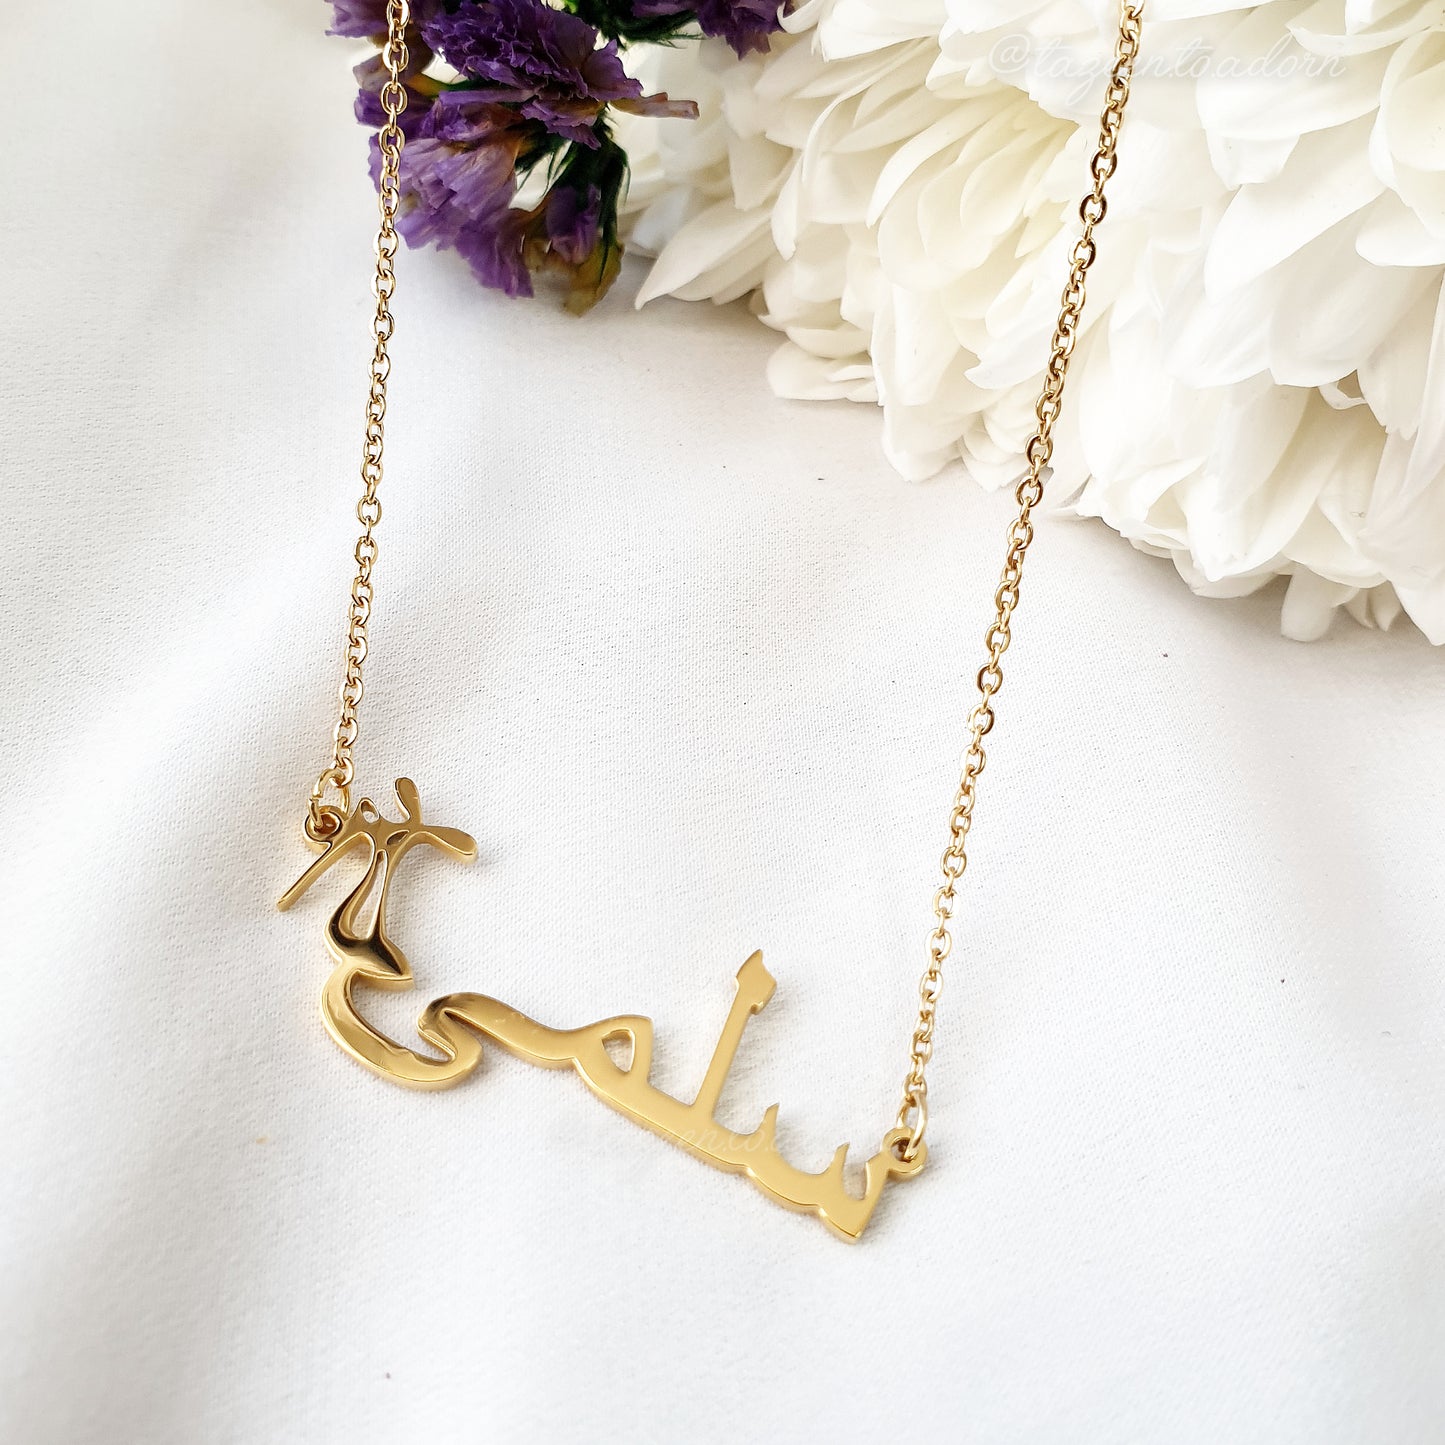 Personalised Custom Single Name Necklace - Anaya Shoe design Limited Edition Jewellery Gift Eid ♡ CINDERELLA